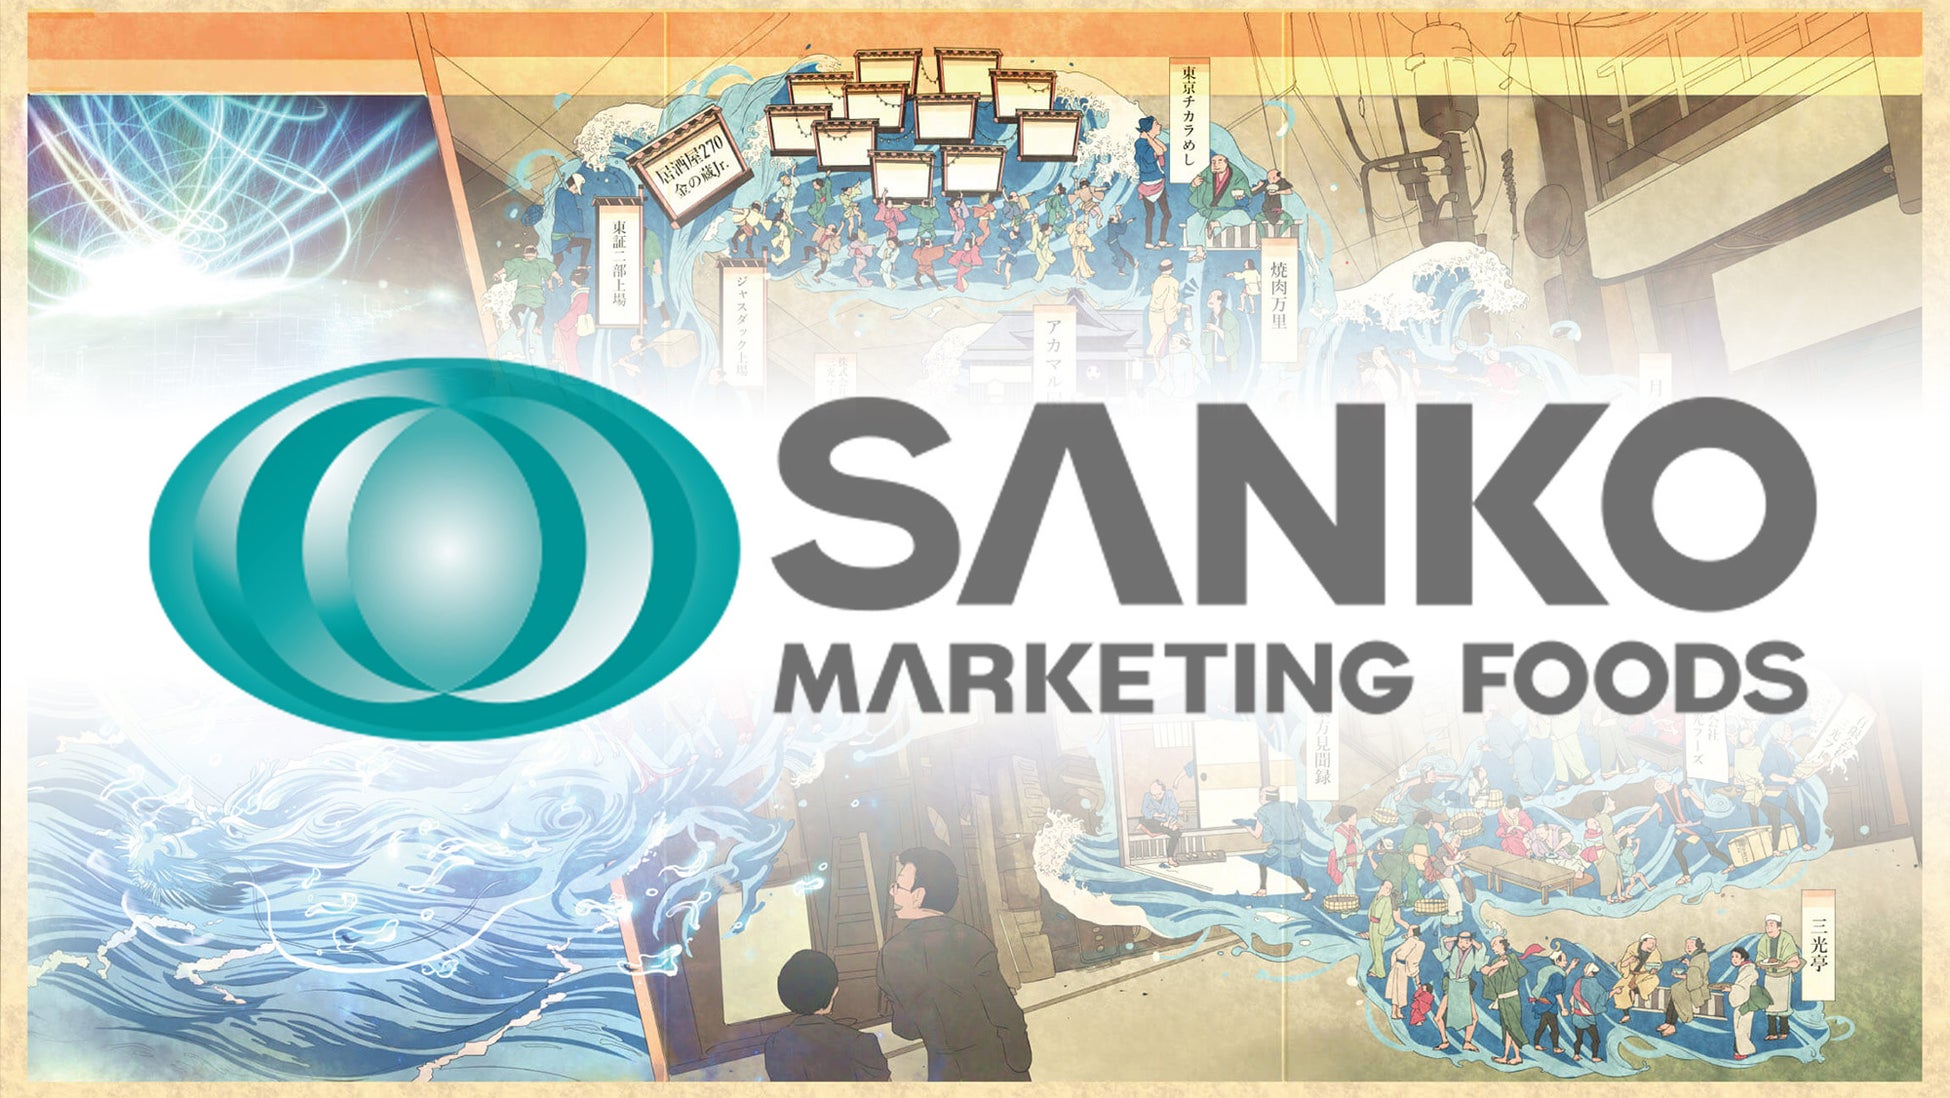 SANKO MARKETING FOODS、ベトナム法人との合弁会社「AKIKO SERVICE AND TRADING JOINT STOCK COMPANY」を設立